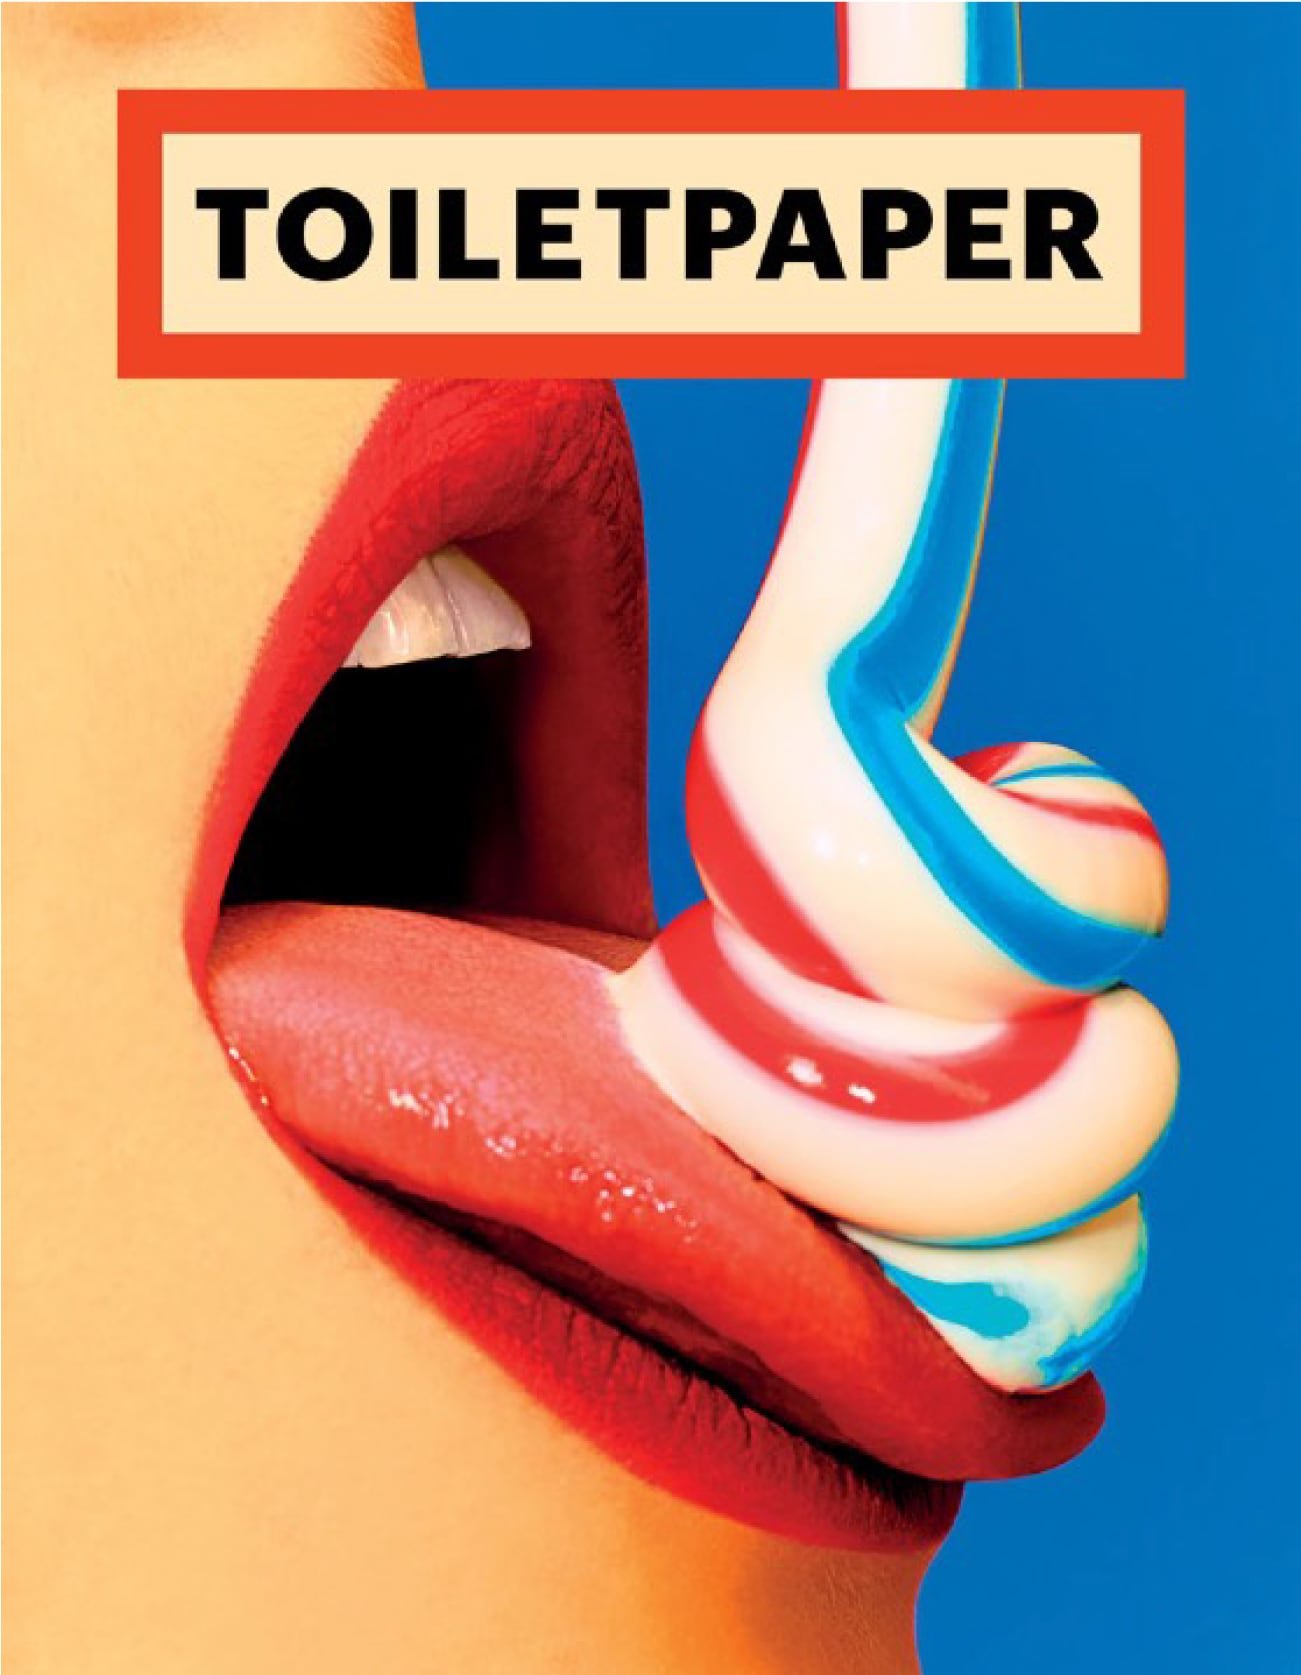 Toiletpaper magazine21.jpg